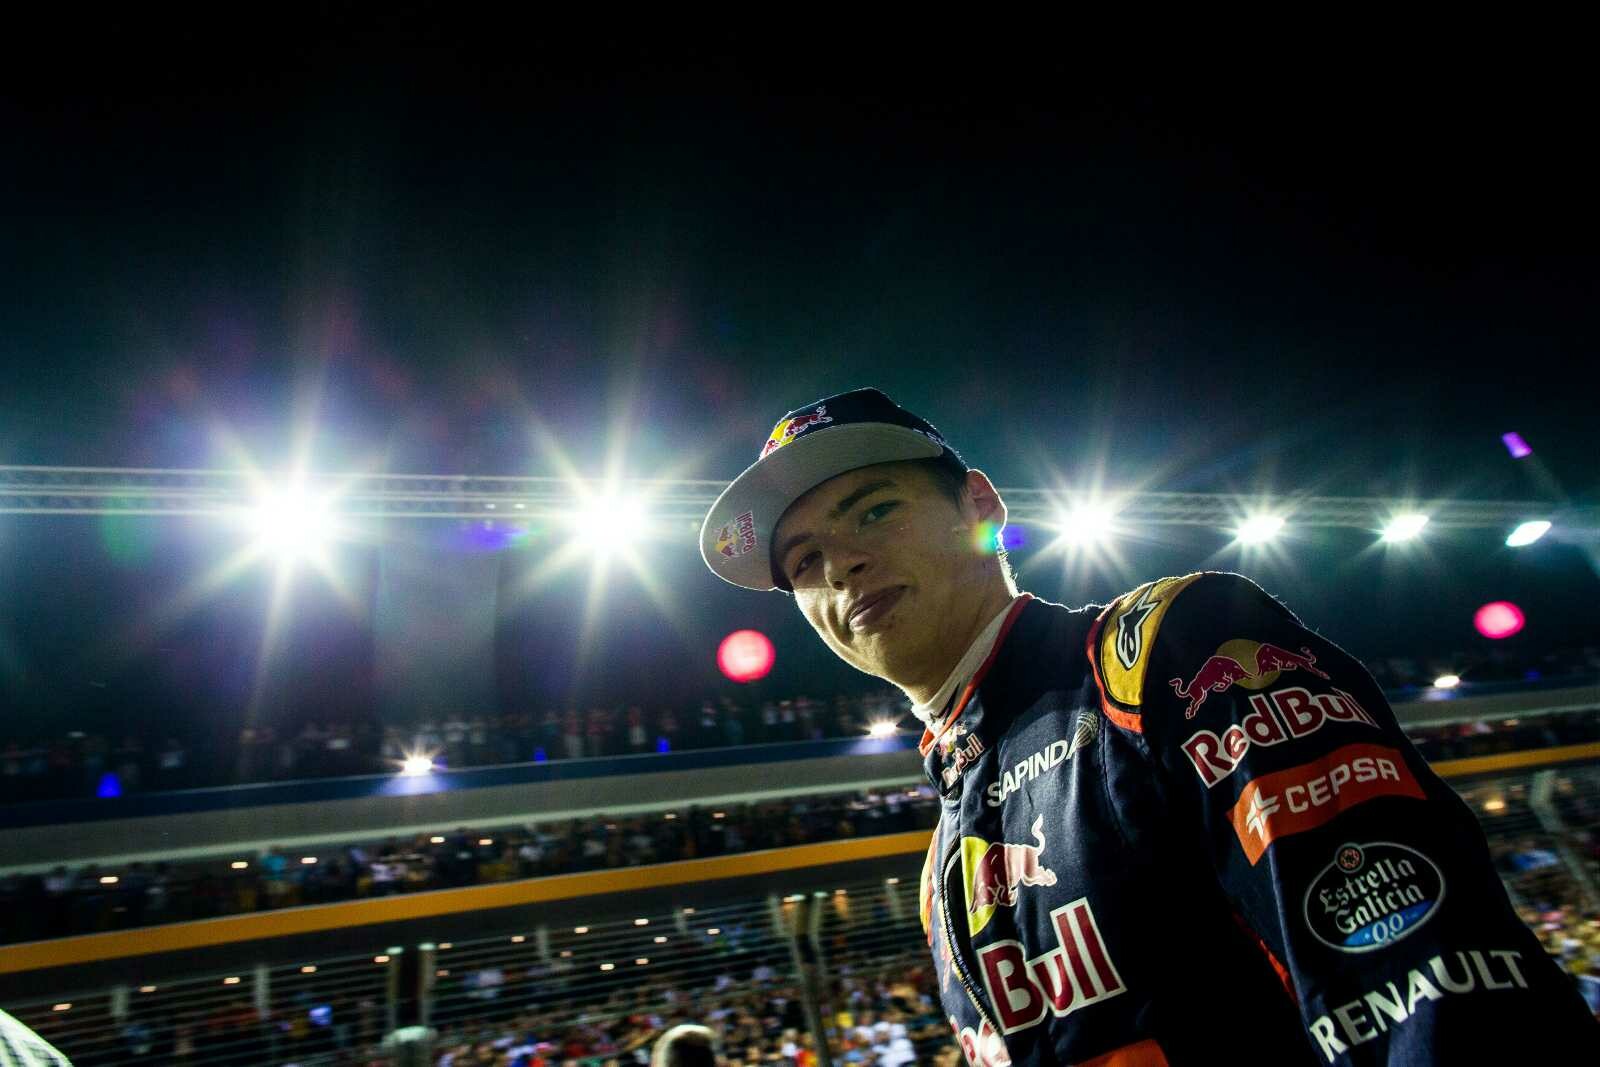 images_Formule1_2015_nieuws_september_Max_Verstappen_Scuderia_Toro_Rosso_GP_Singapore_2015_post_race